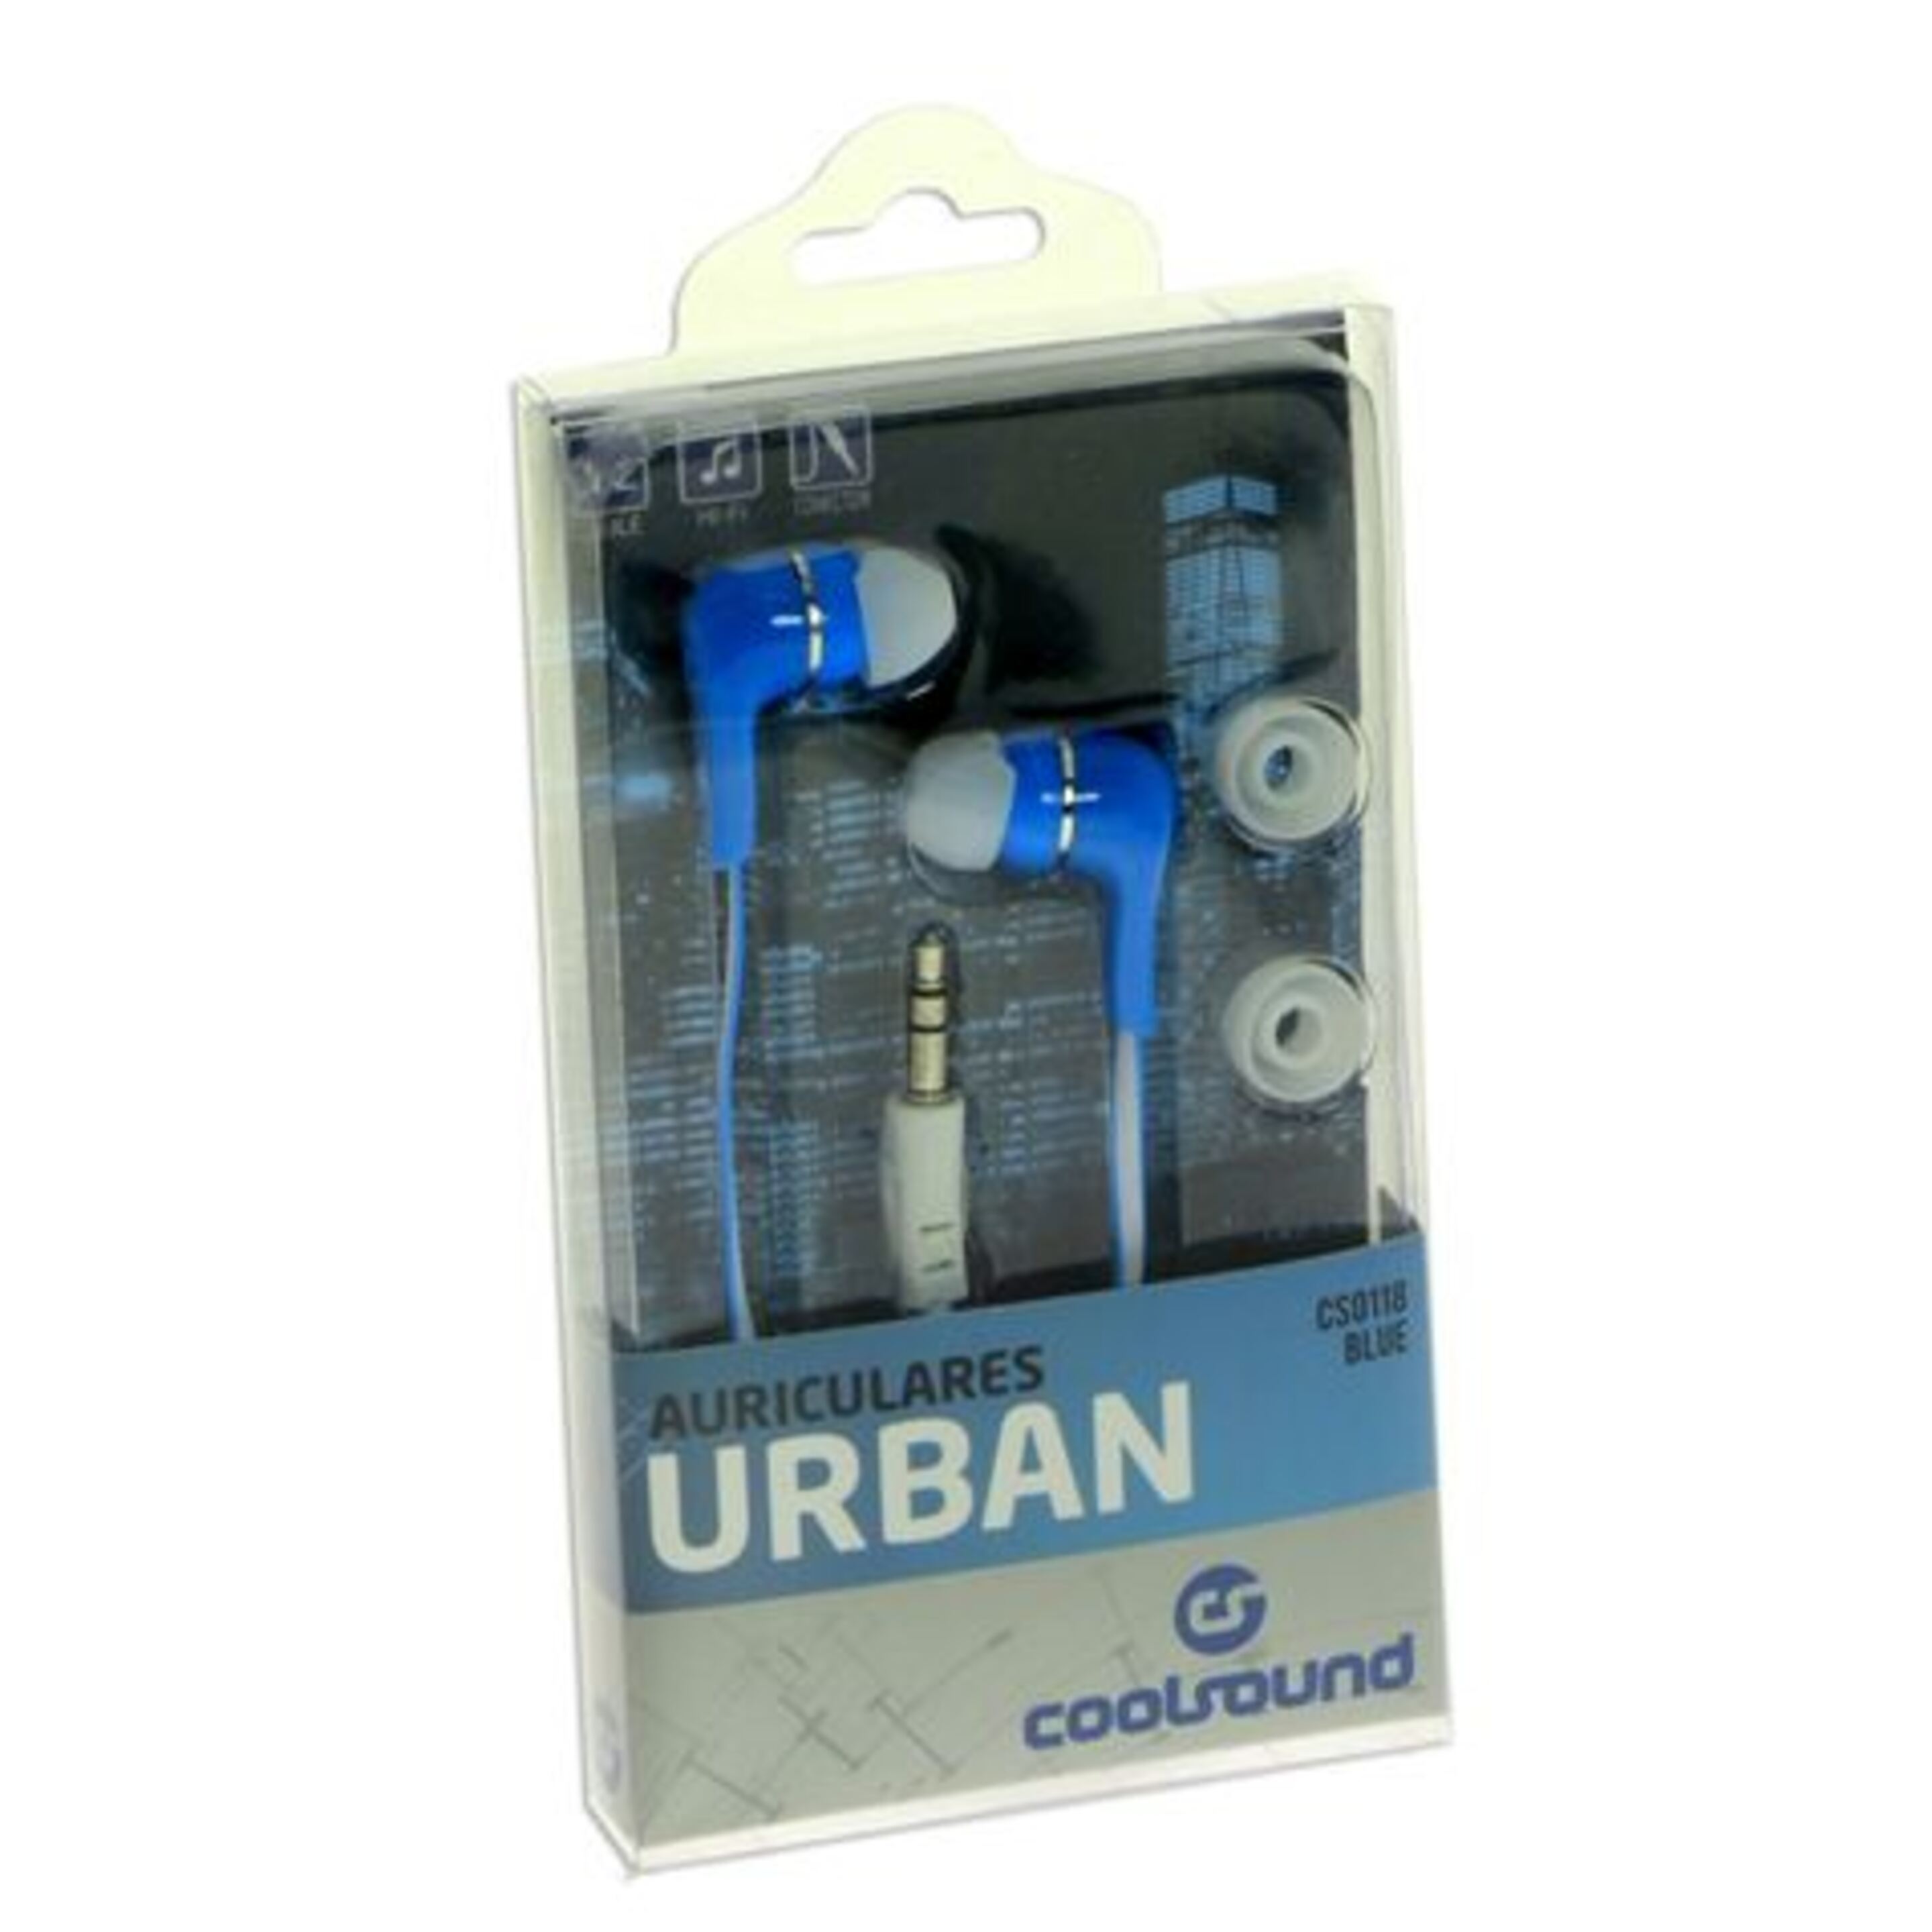 Auriculares Com Fio Coolsound Urban - Azul | Sport Zone MKP